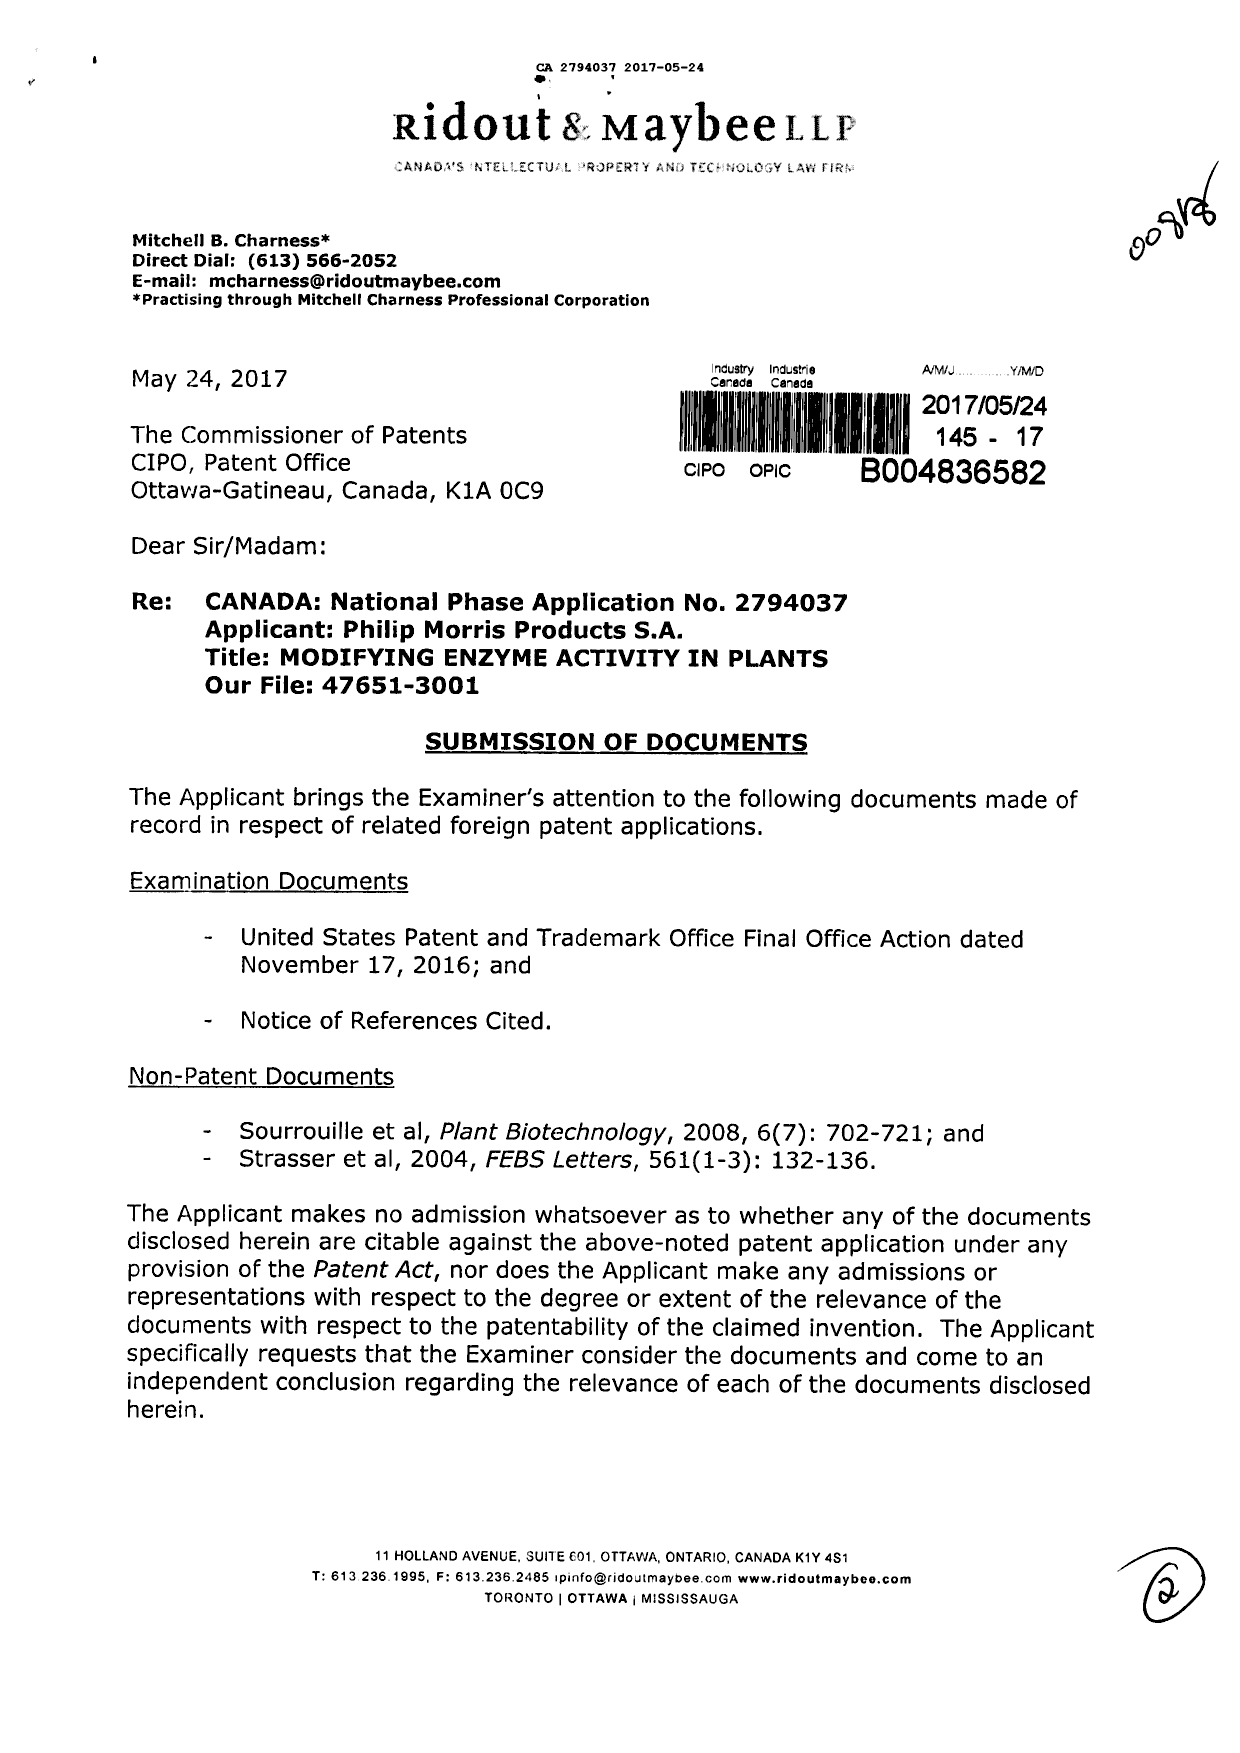 Canadian Patent Document 2794037. Amendment 20170524. Image 1 of 2